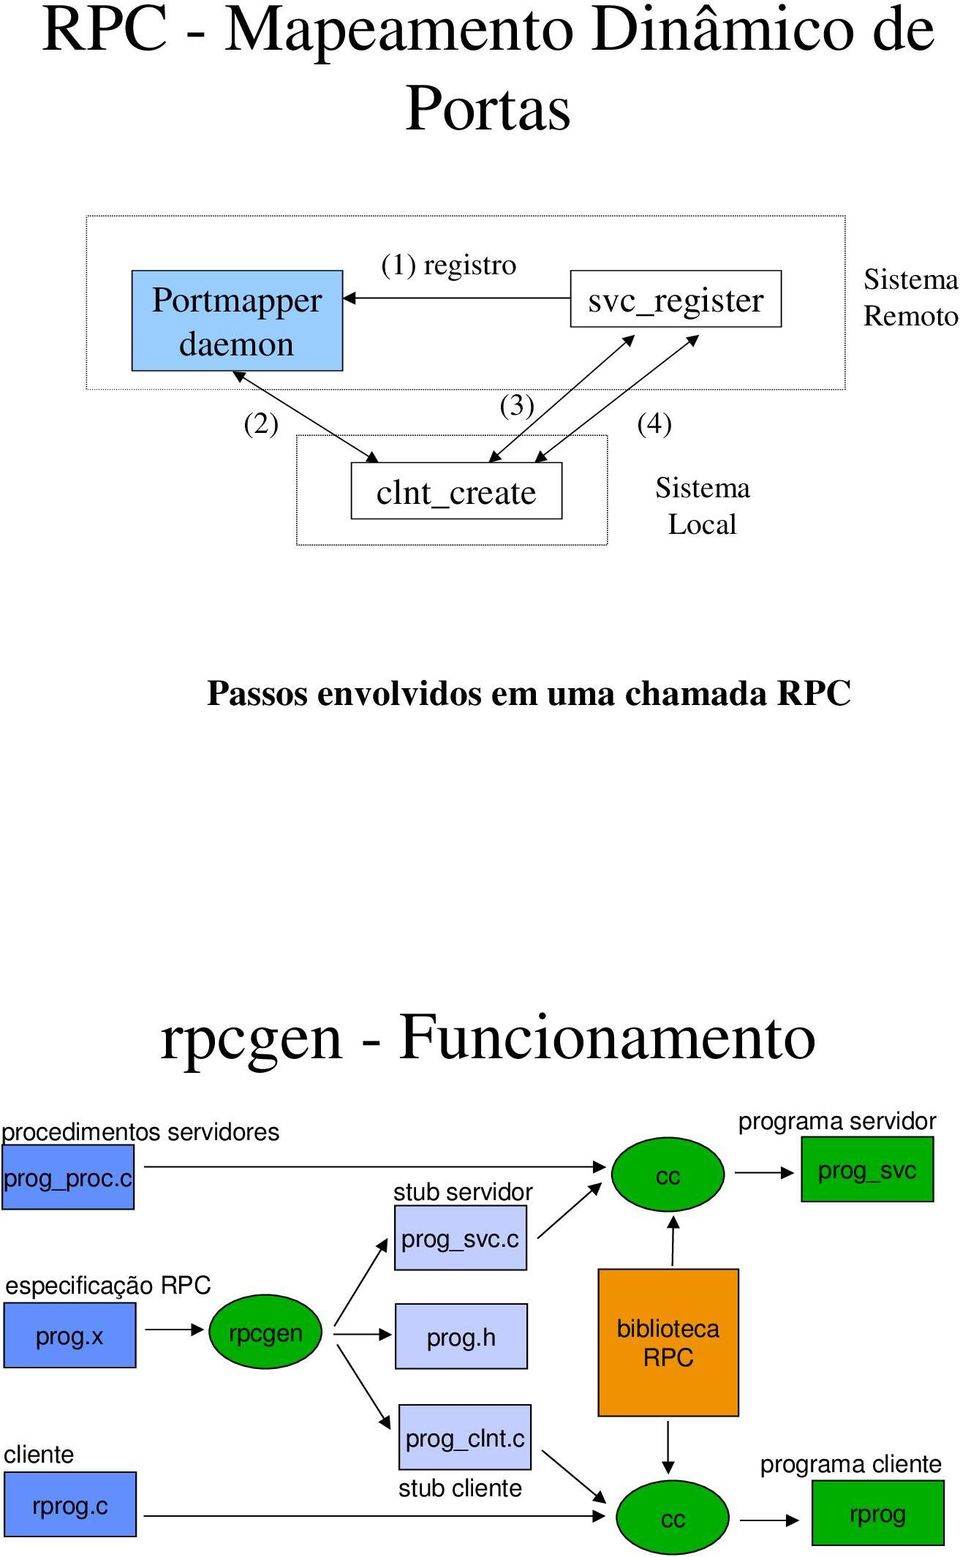 procedimentos servidores prog_proc.c stub servidor cc prog_svc.c especificação RPC prog.x rpcgen prog.